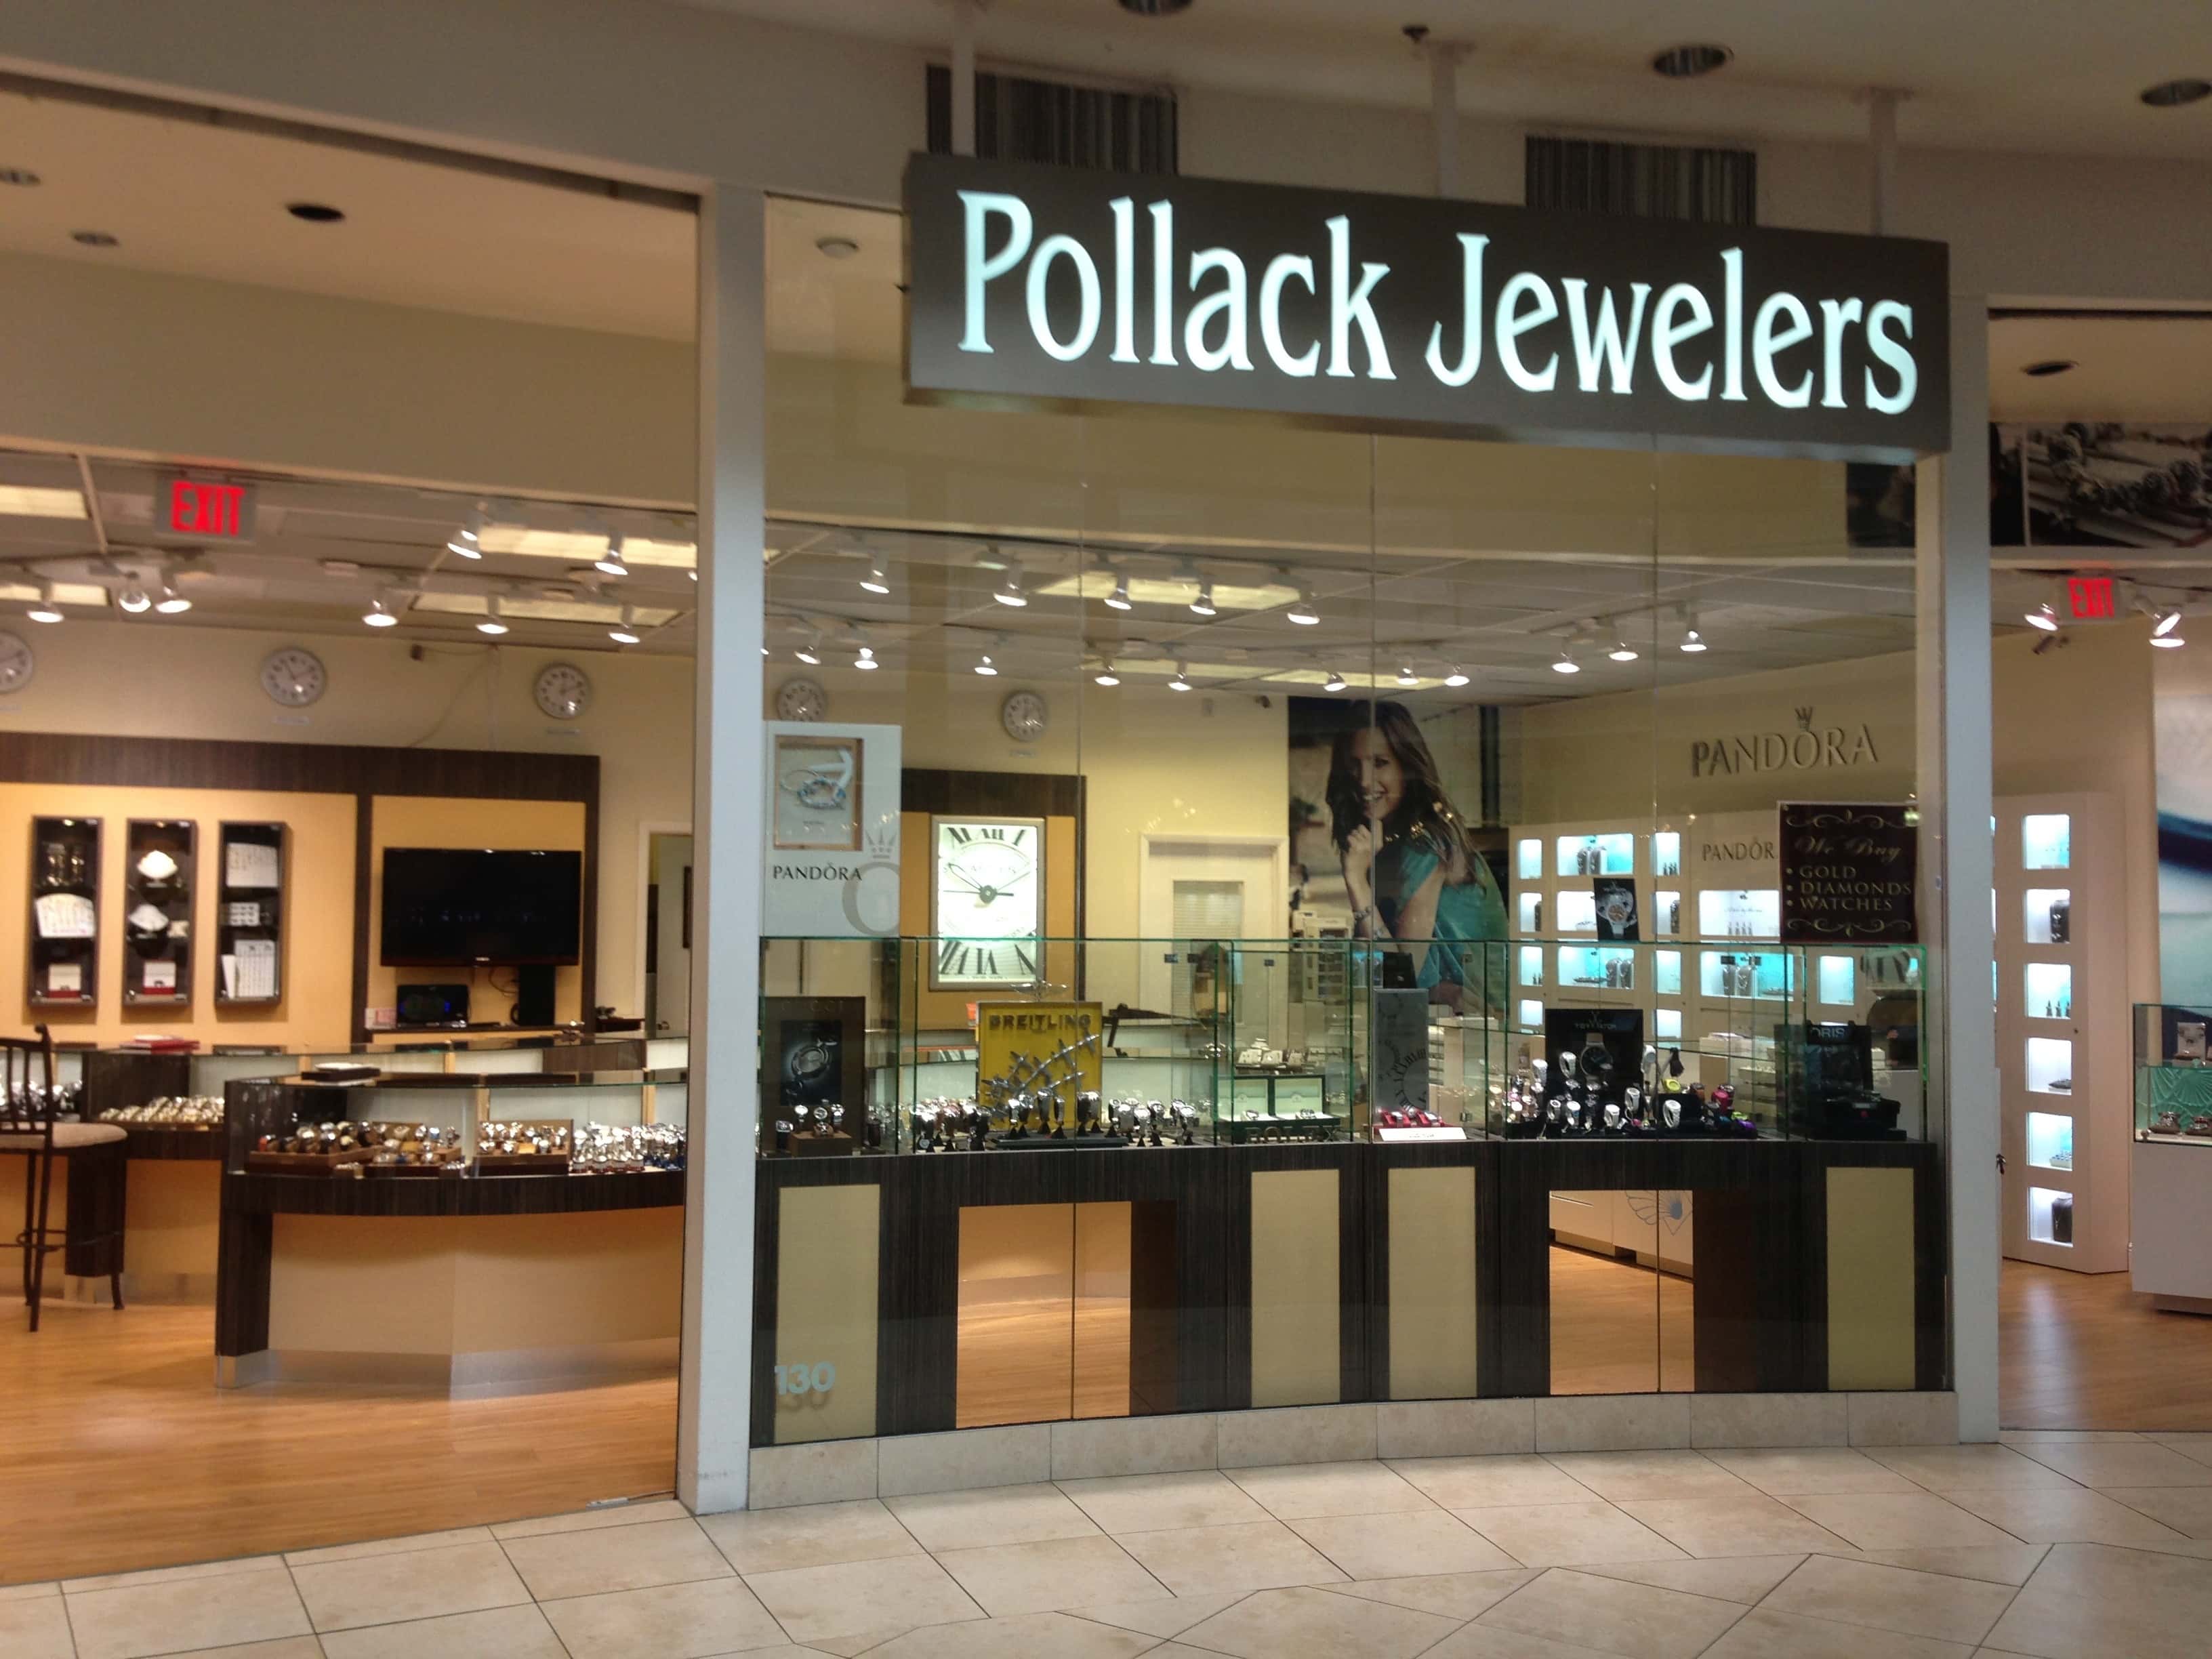 Pollack Jewelers - Sunrise, FL, US, best jewelry